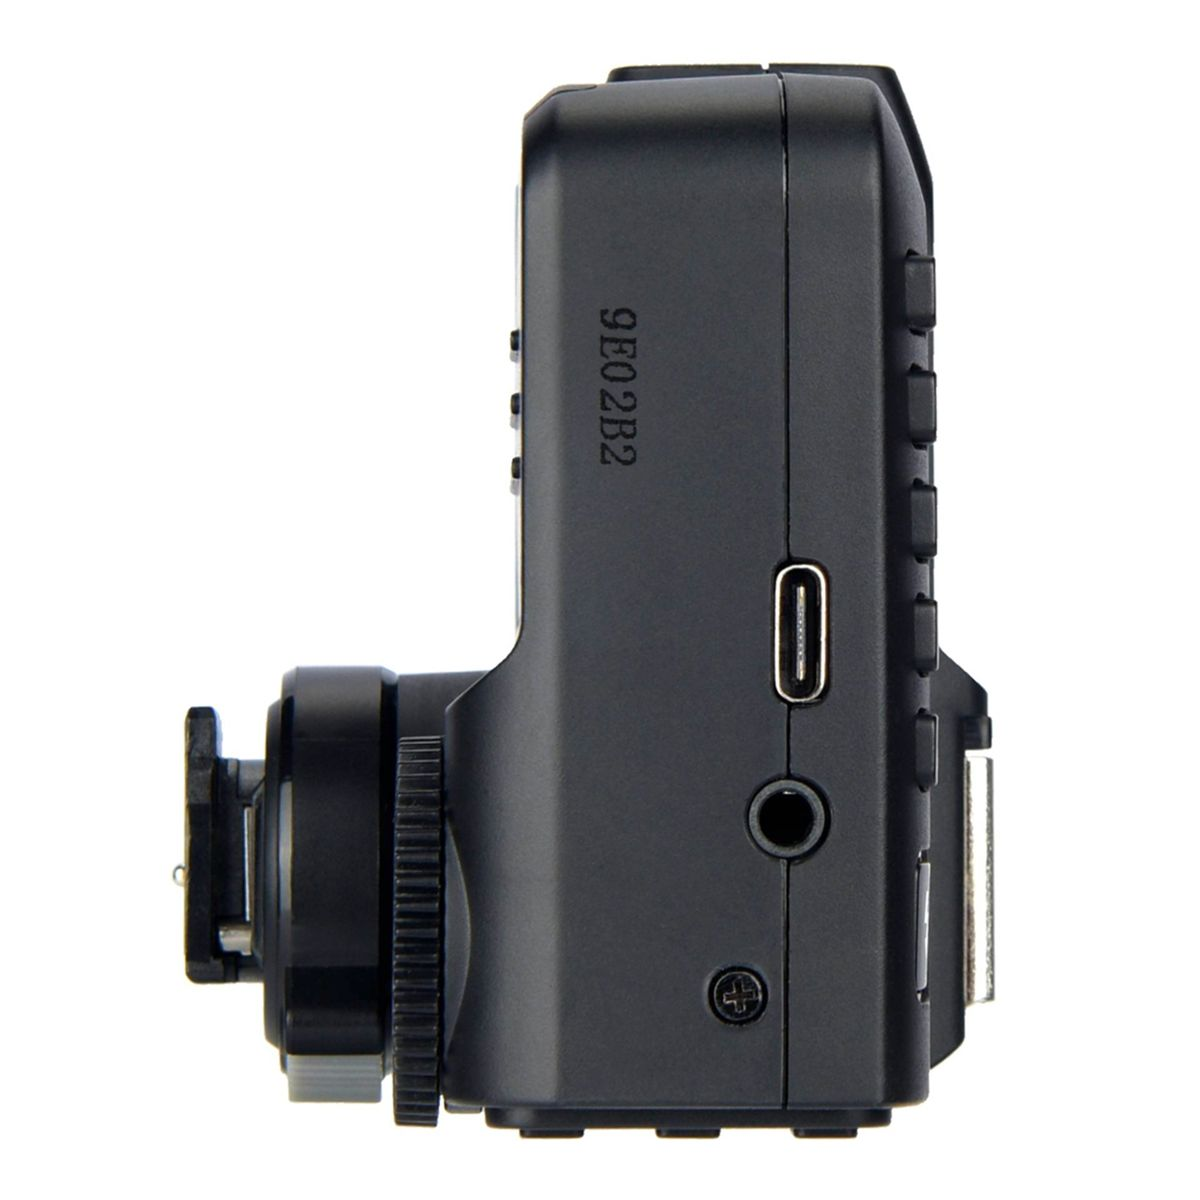 Sony TTL für Trigger Flash Sony GODOX X2 2.4G